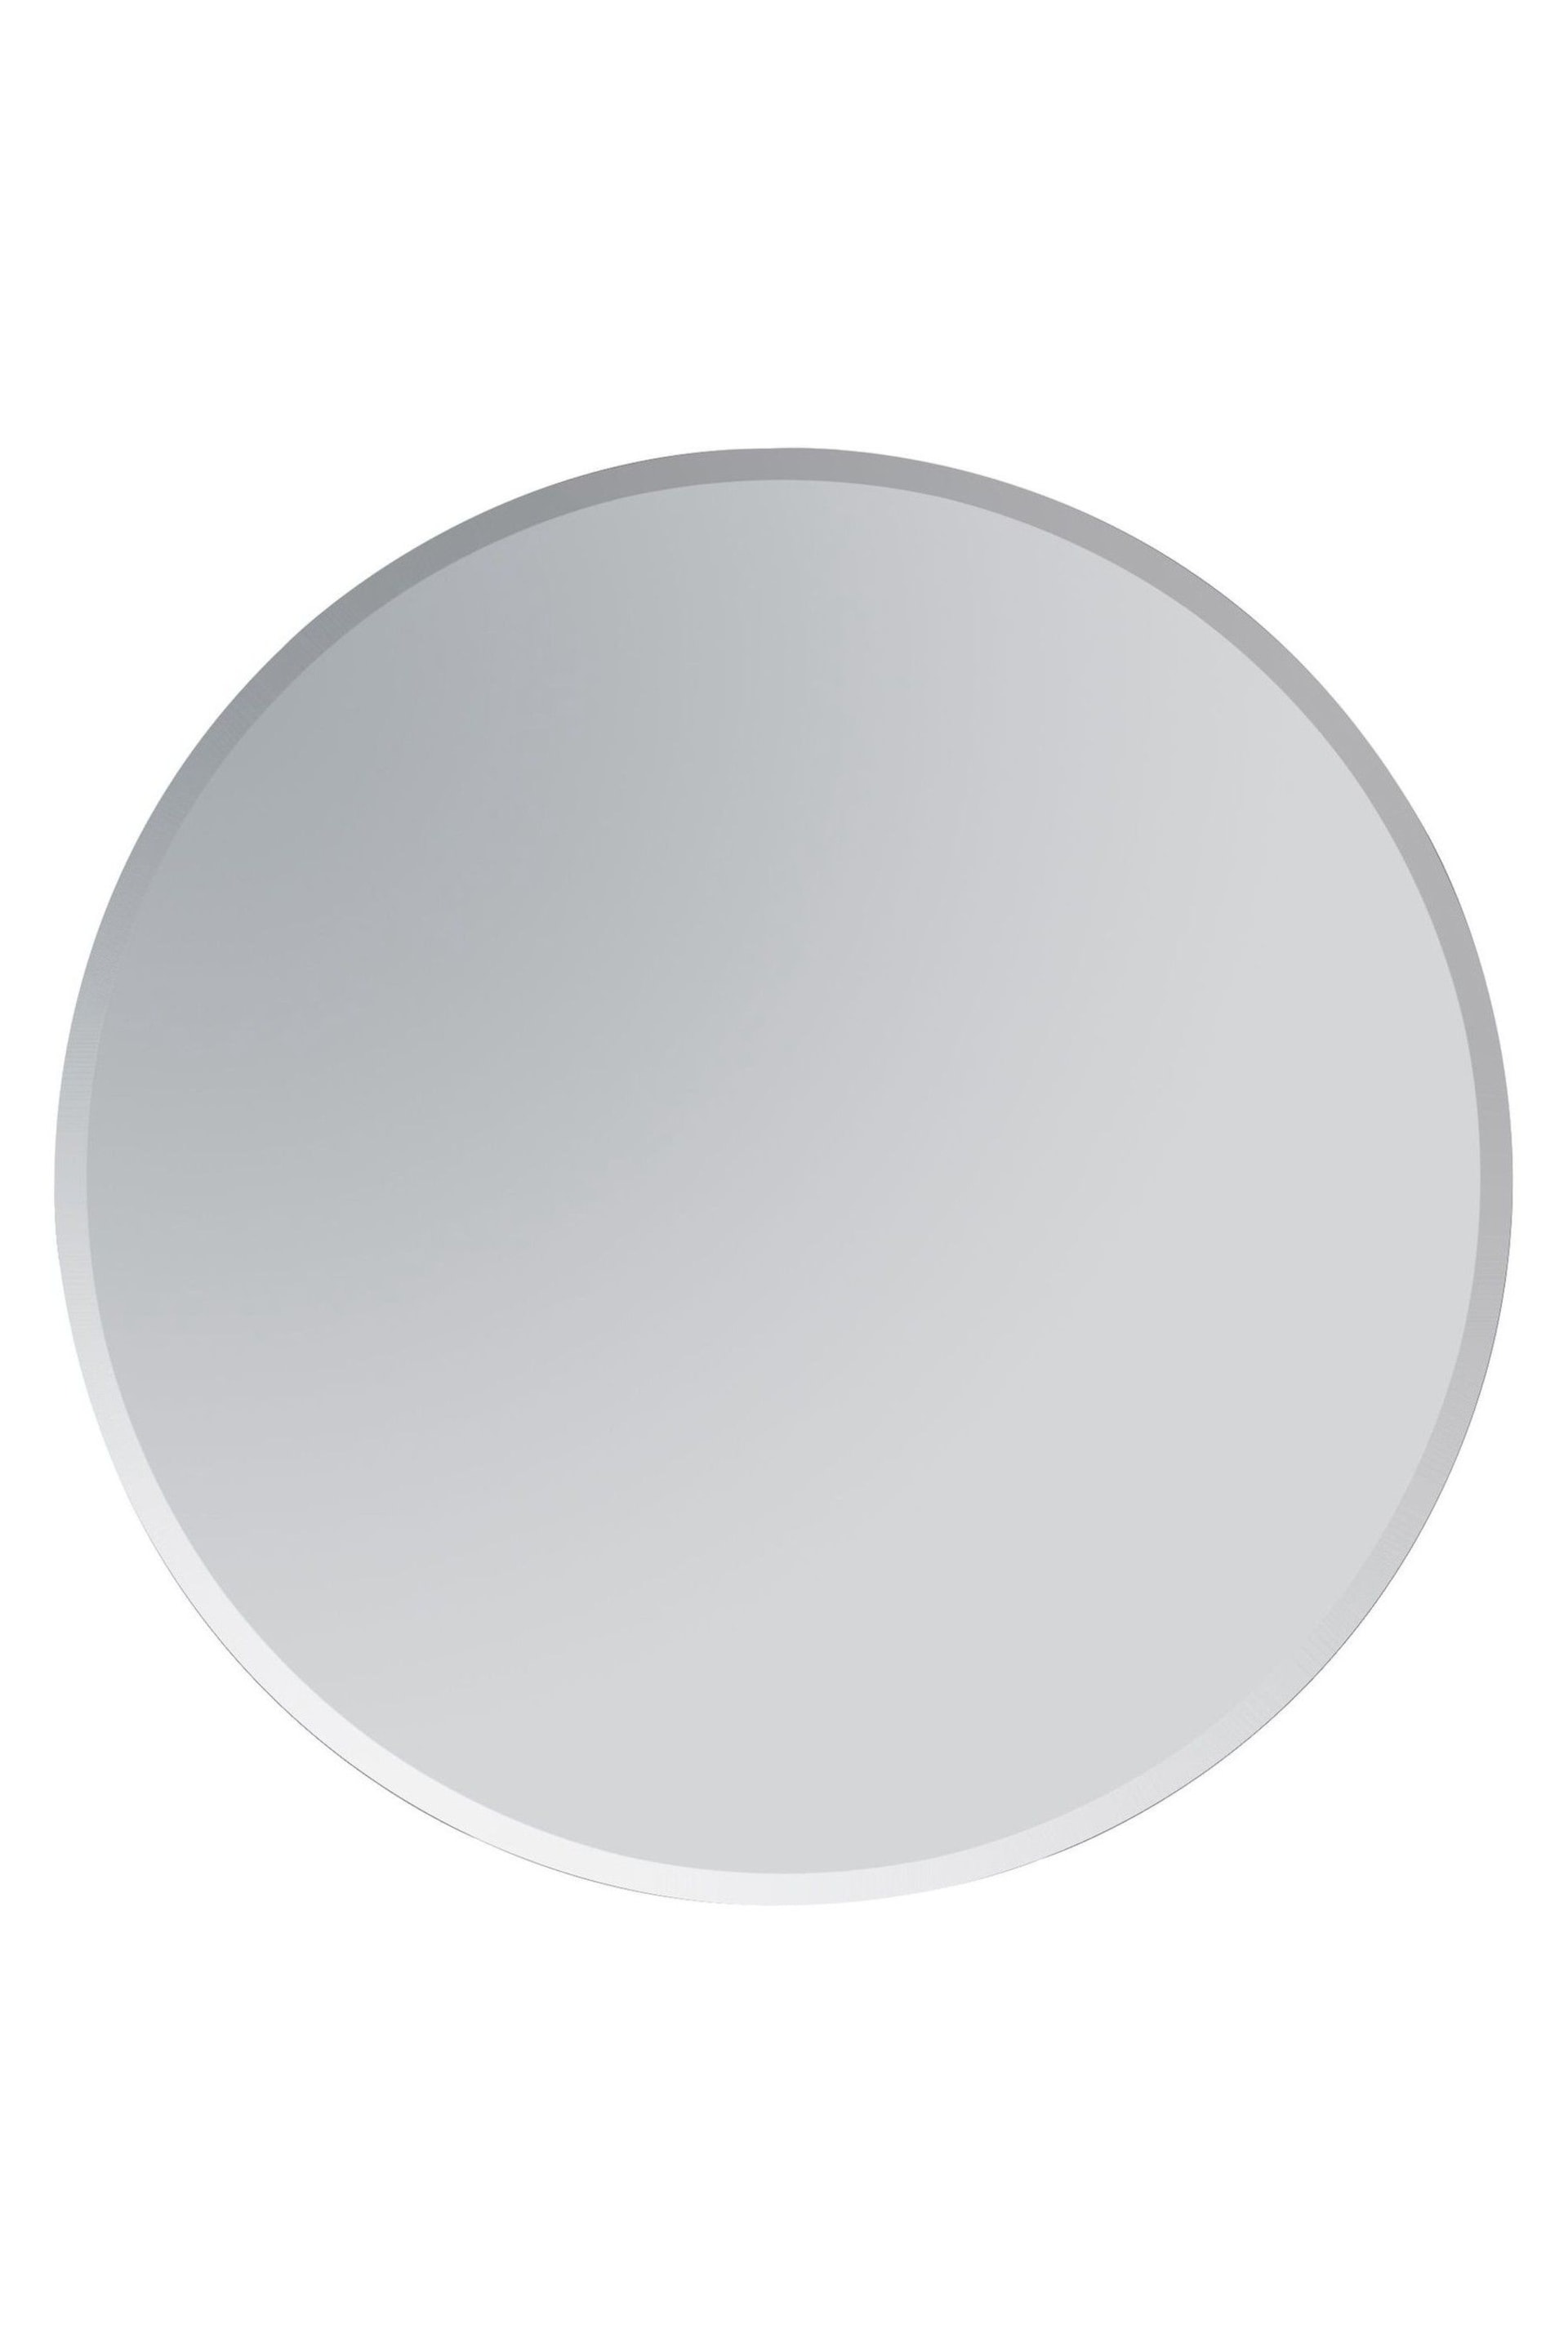 Showerdrape Fitzrovia Round Bathroom Mirror - Image 2 of 4